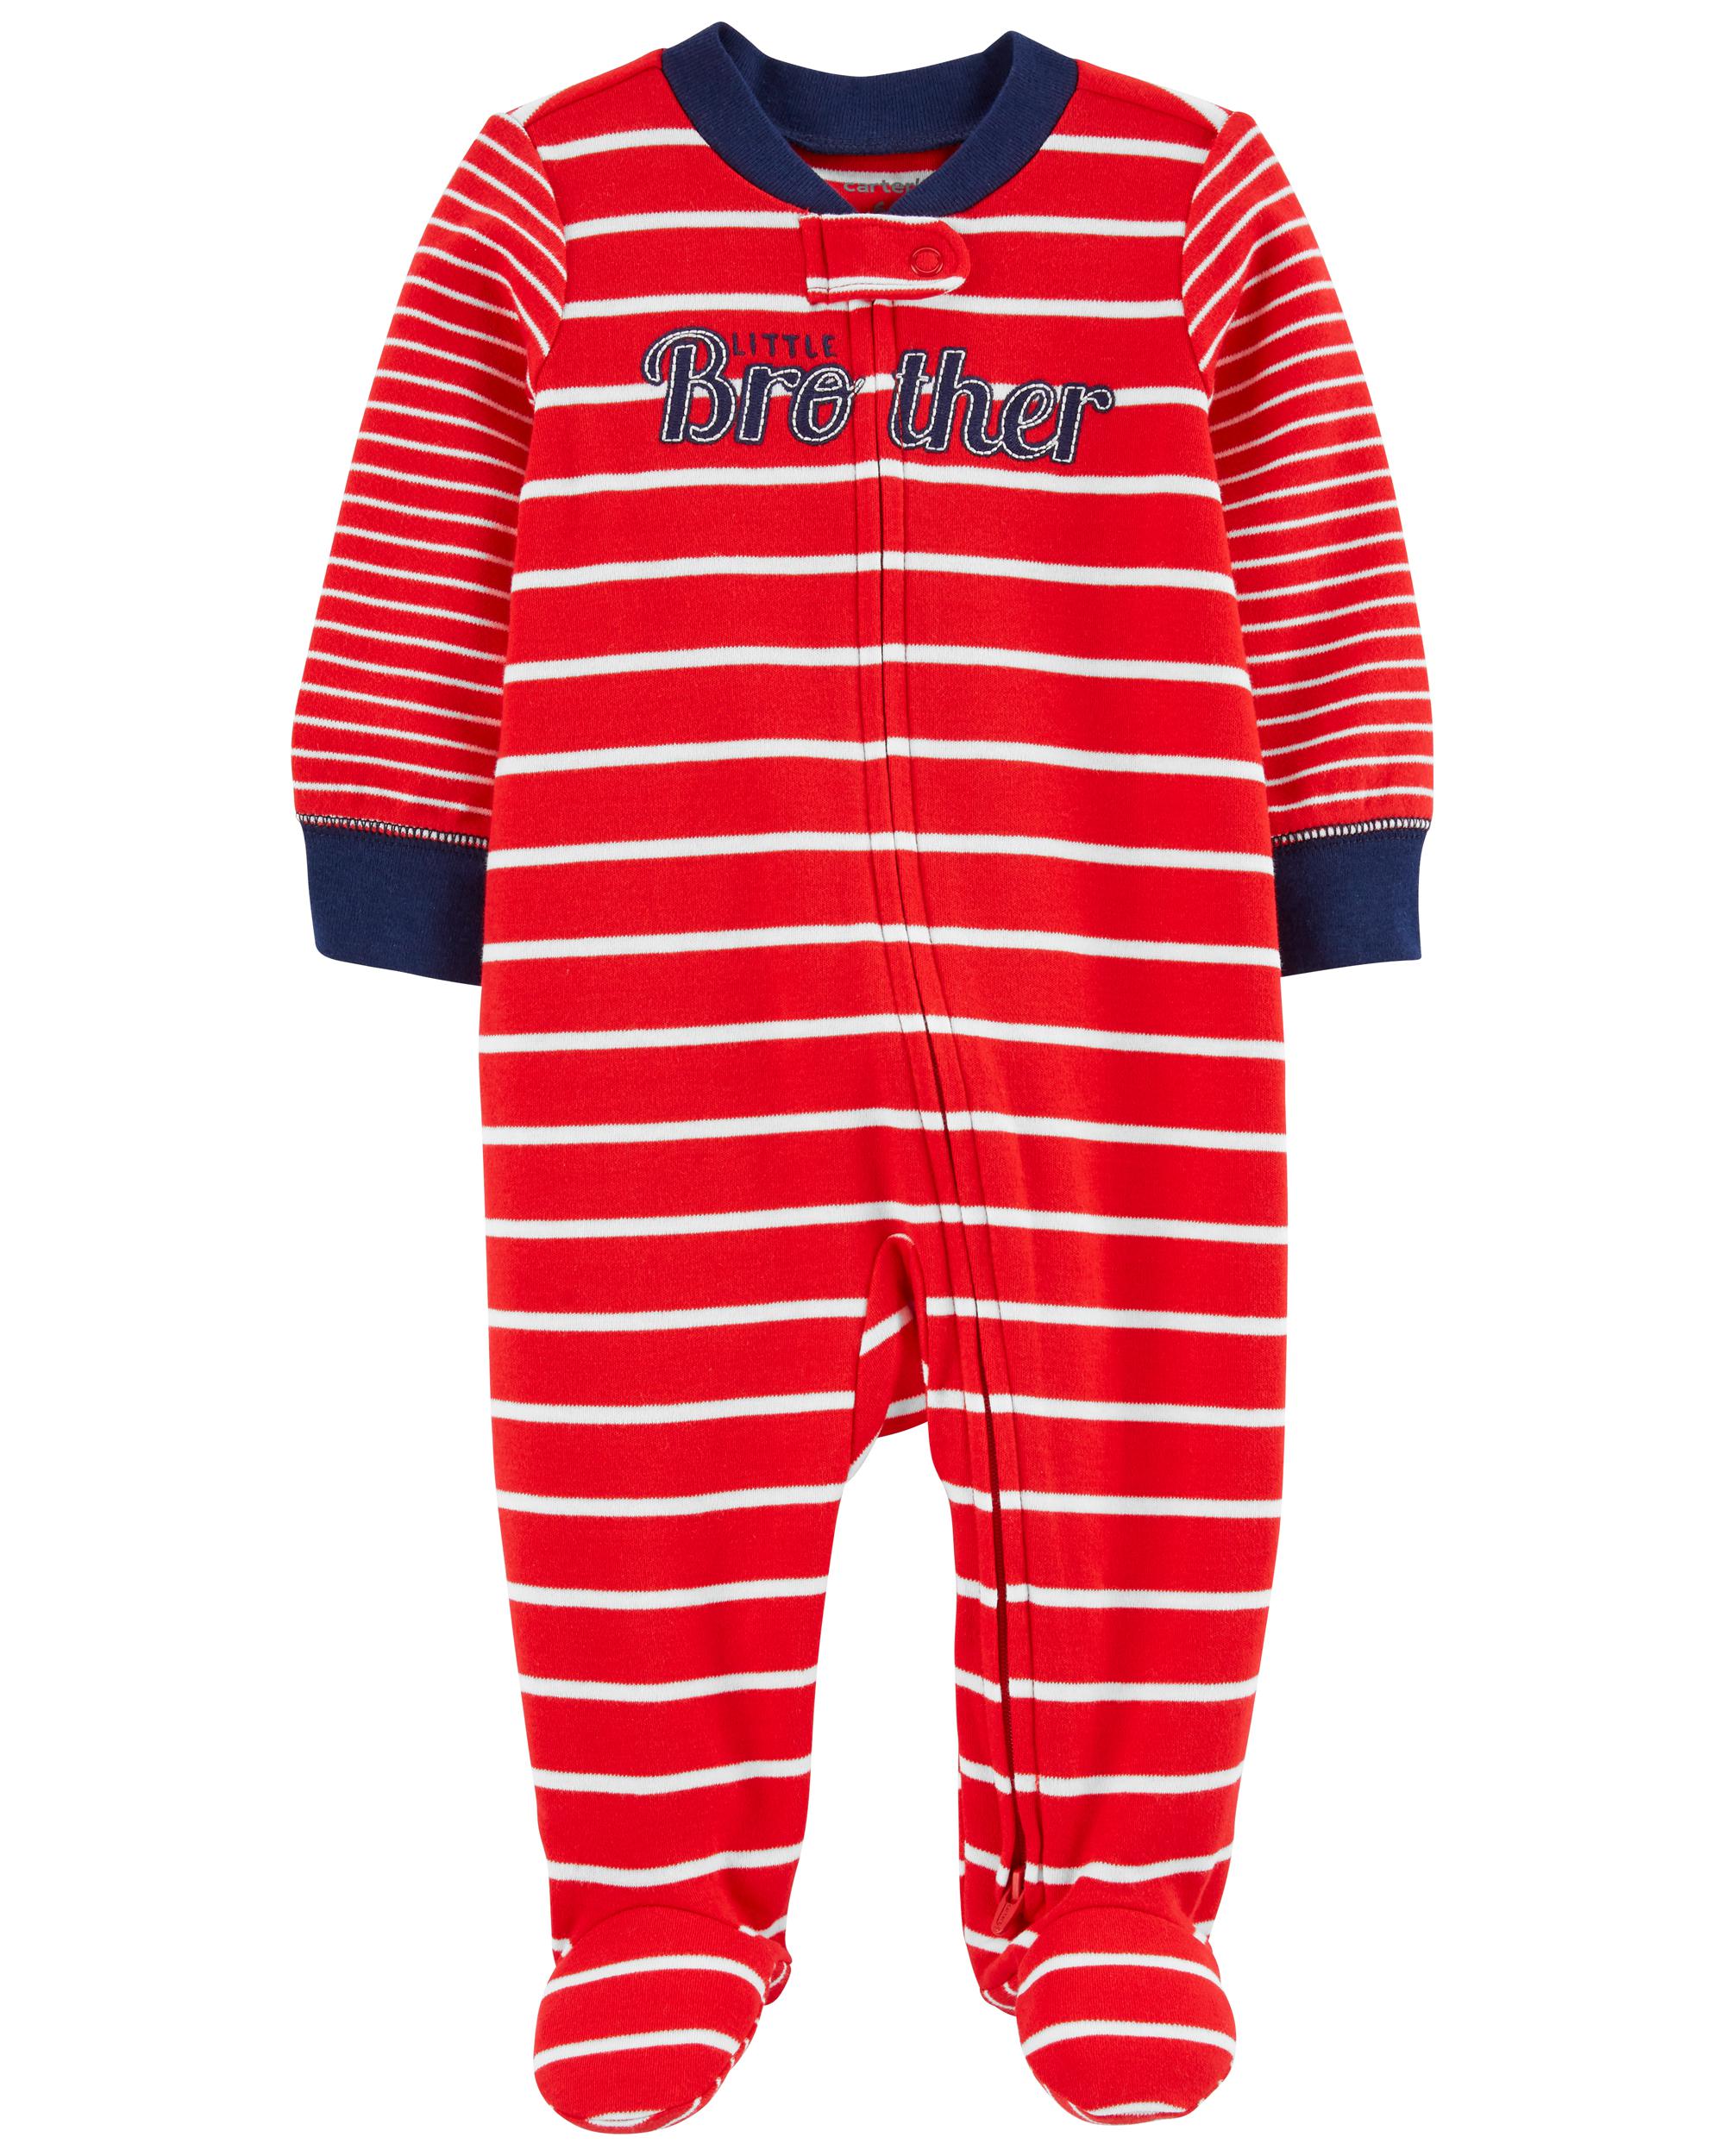 Baby Brother 2-Way Zip Cotton Sleeper Pyjamas